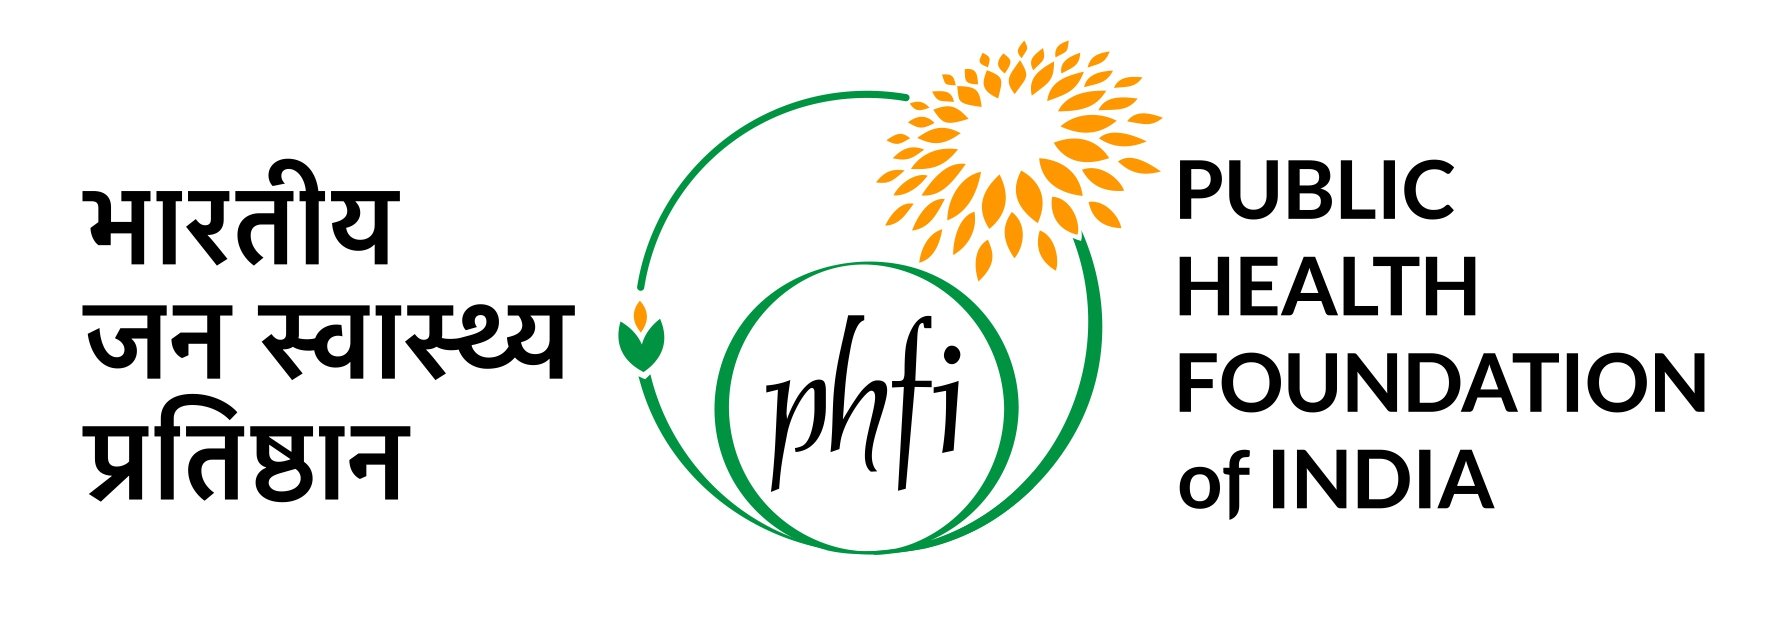 Public Health Foundation of India Logo